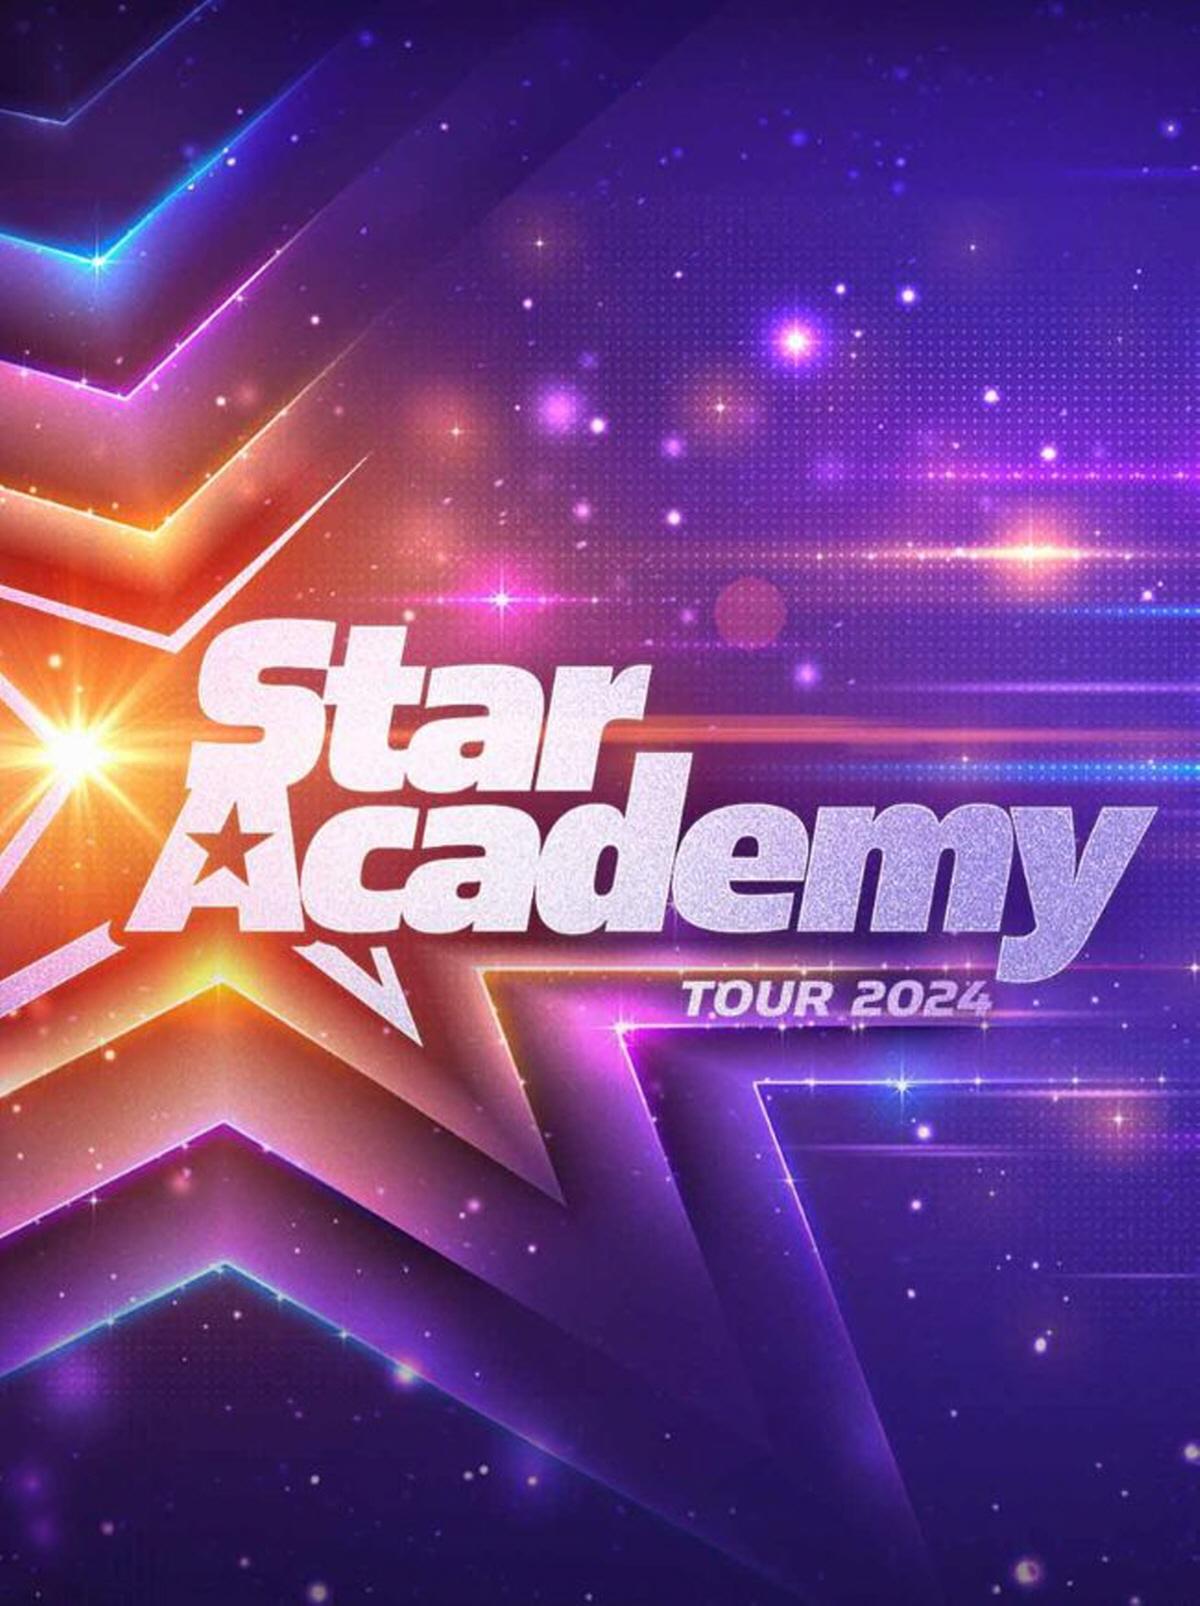 Illustration star academy tour 2024 1 1706714234